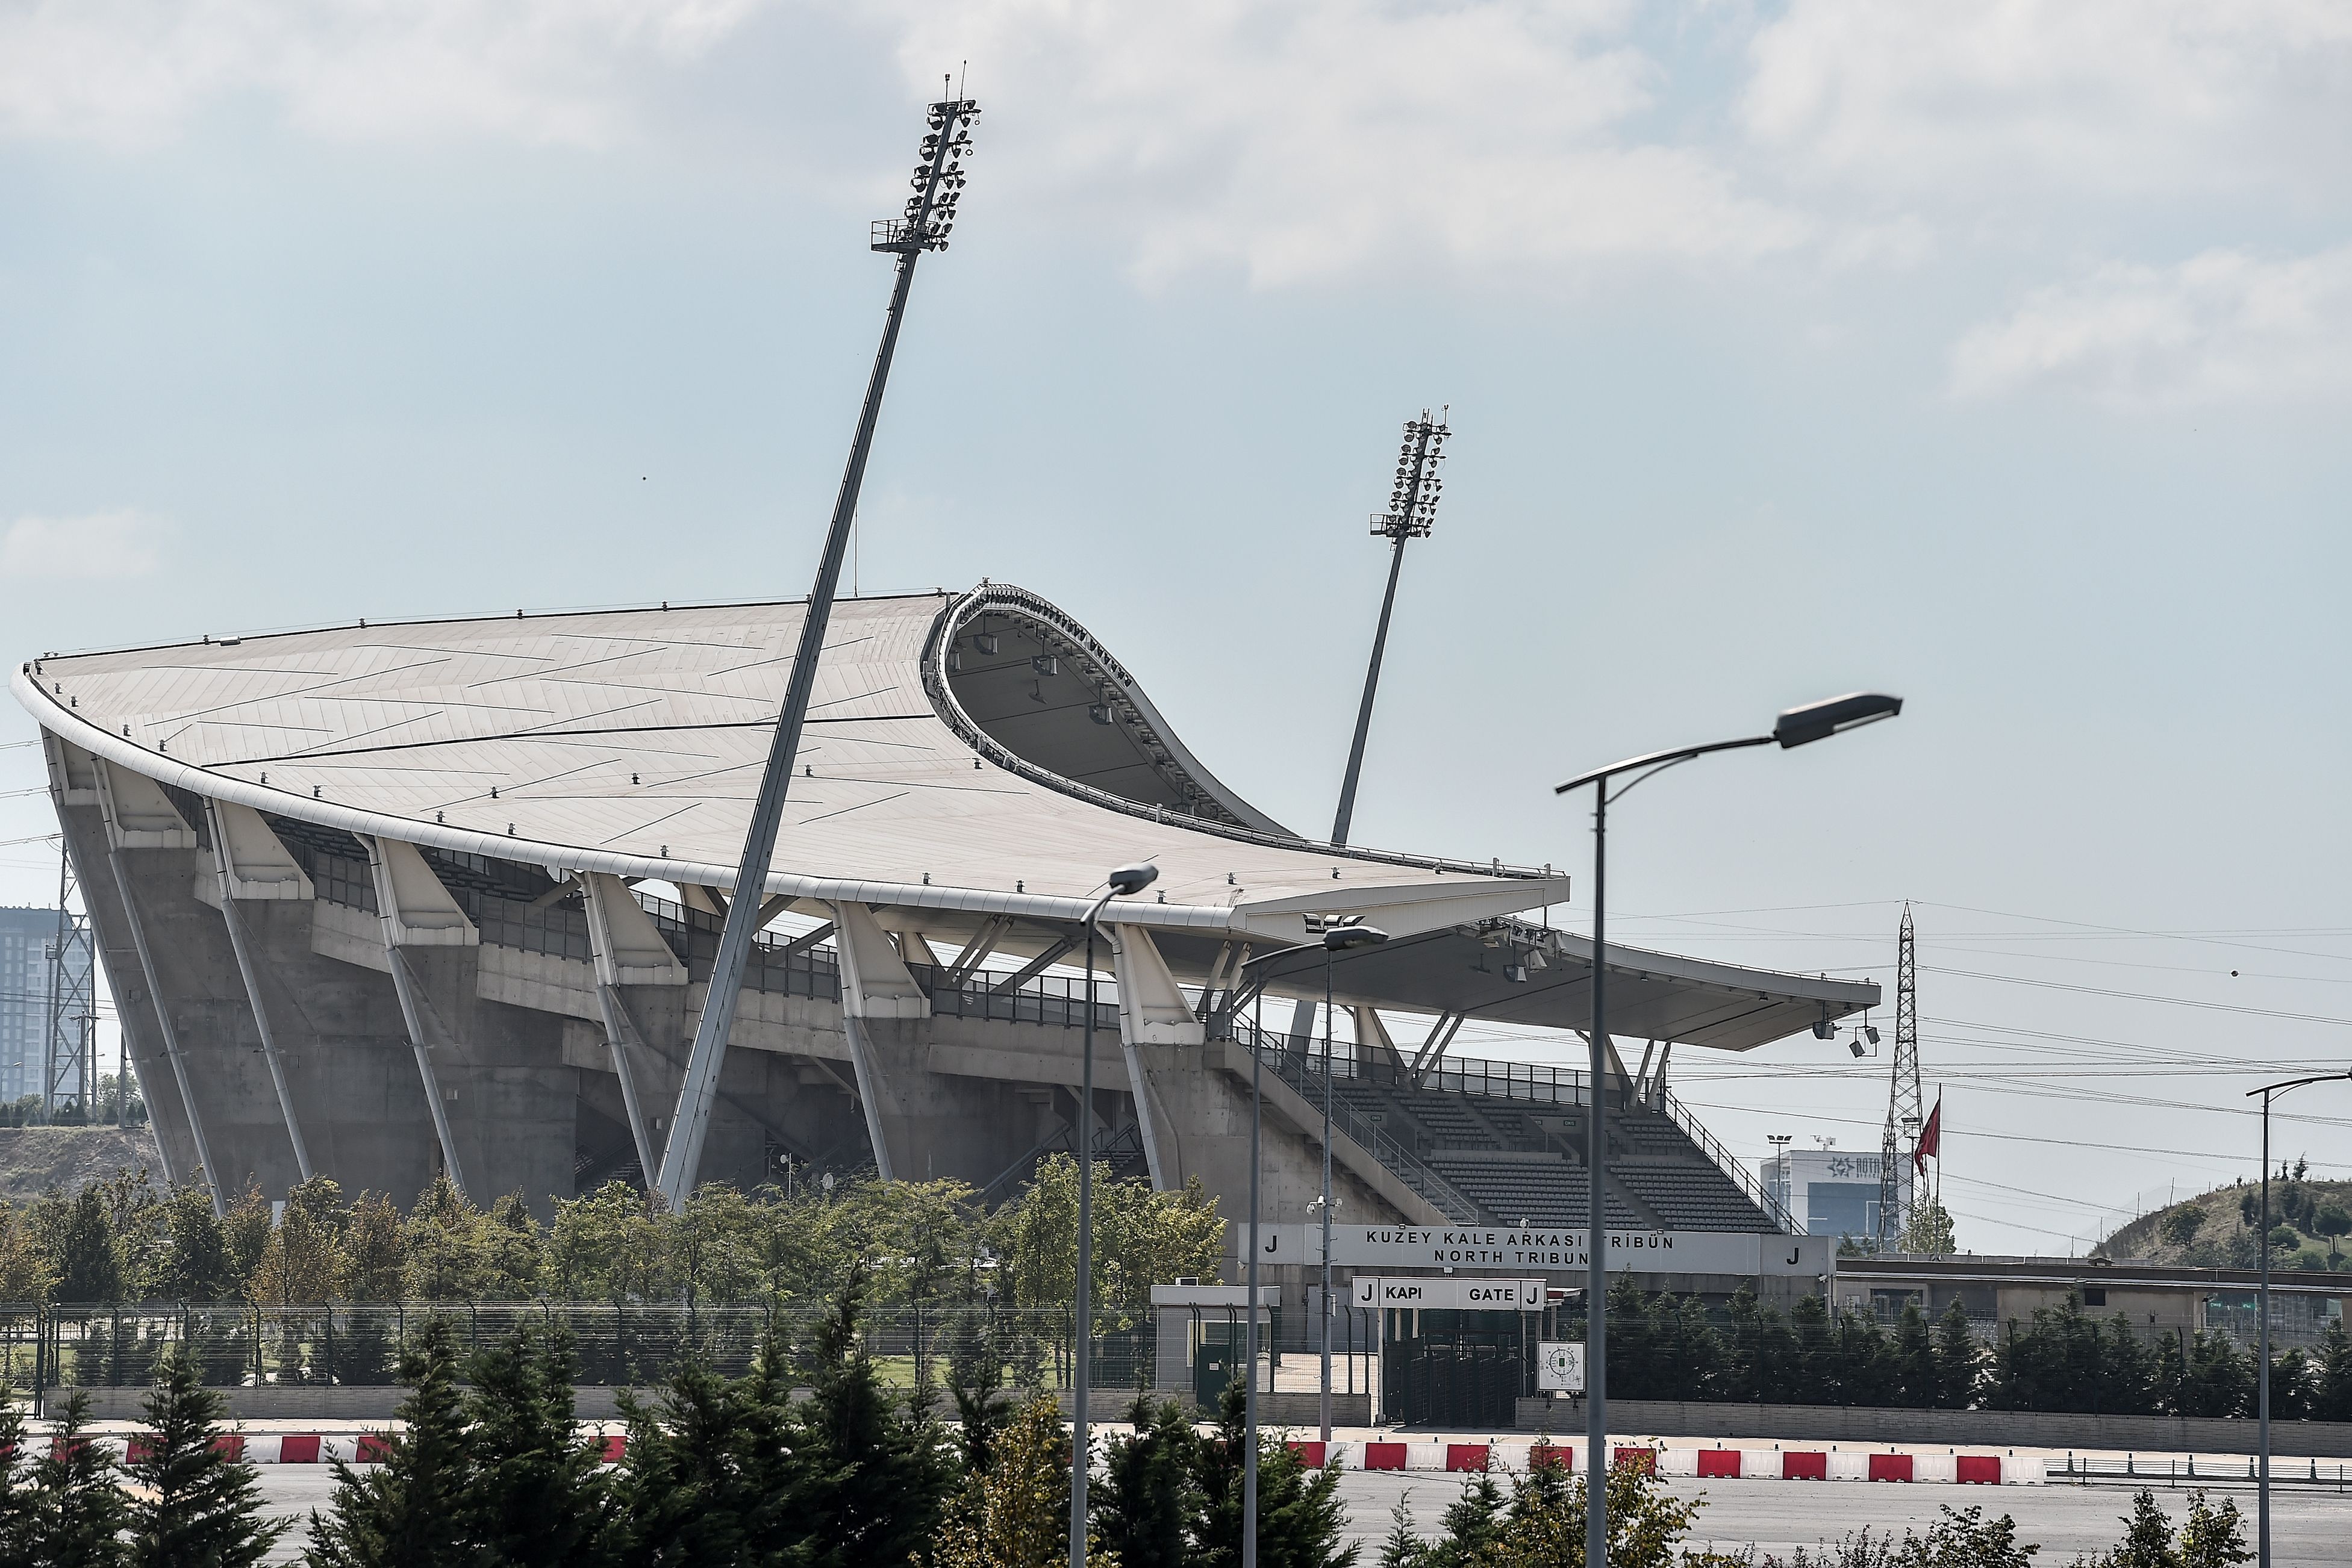 Final da Champions será exibida em drive-in no Allianz Parque